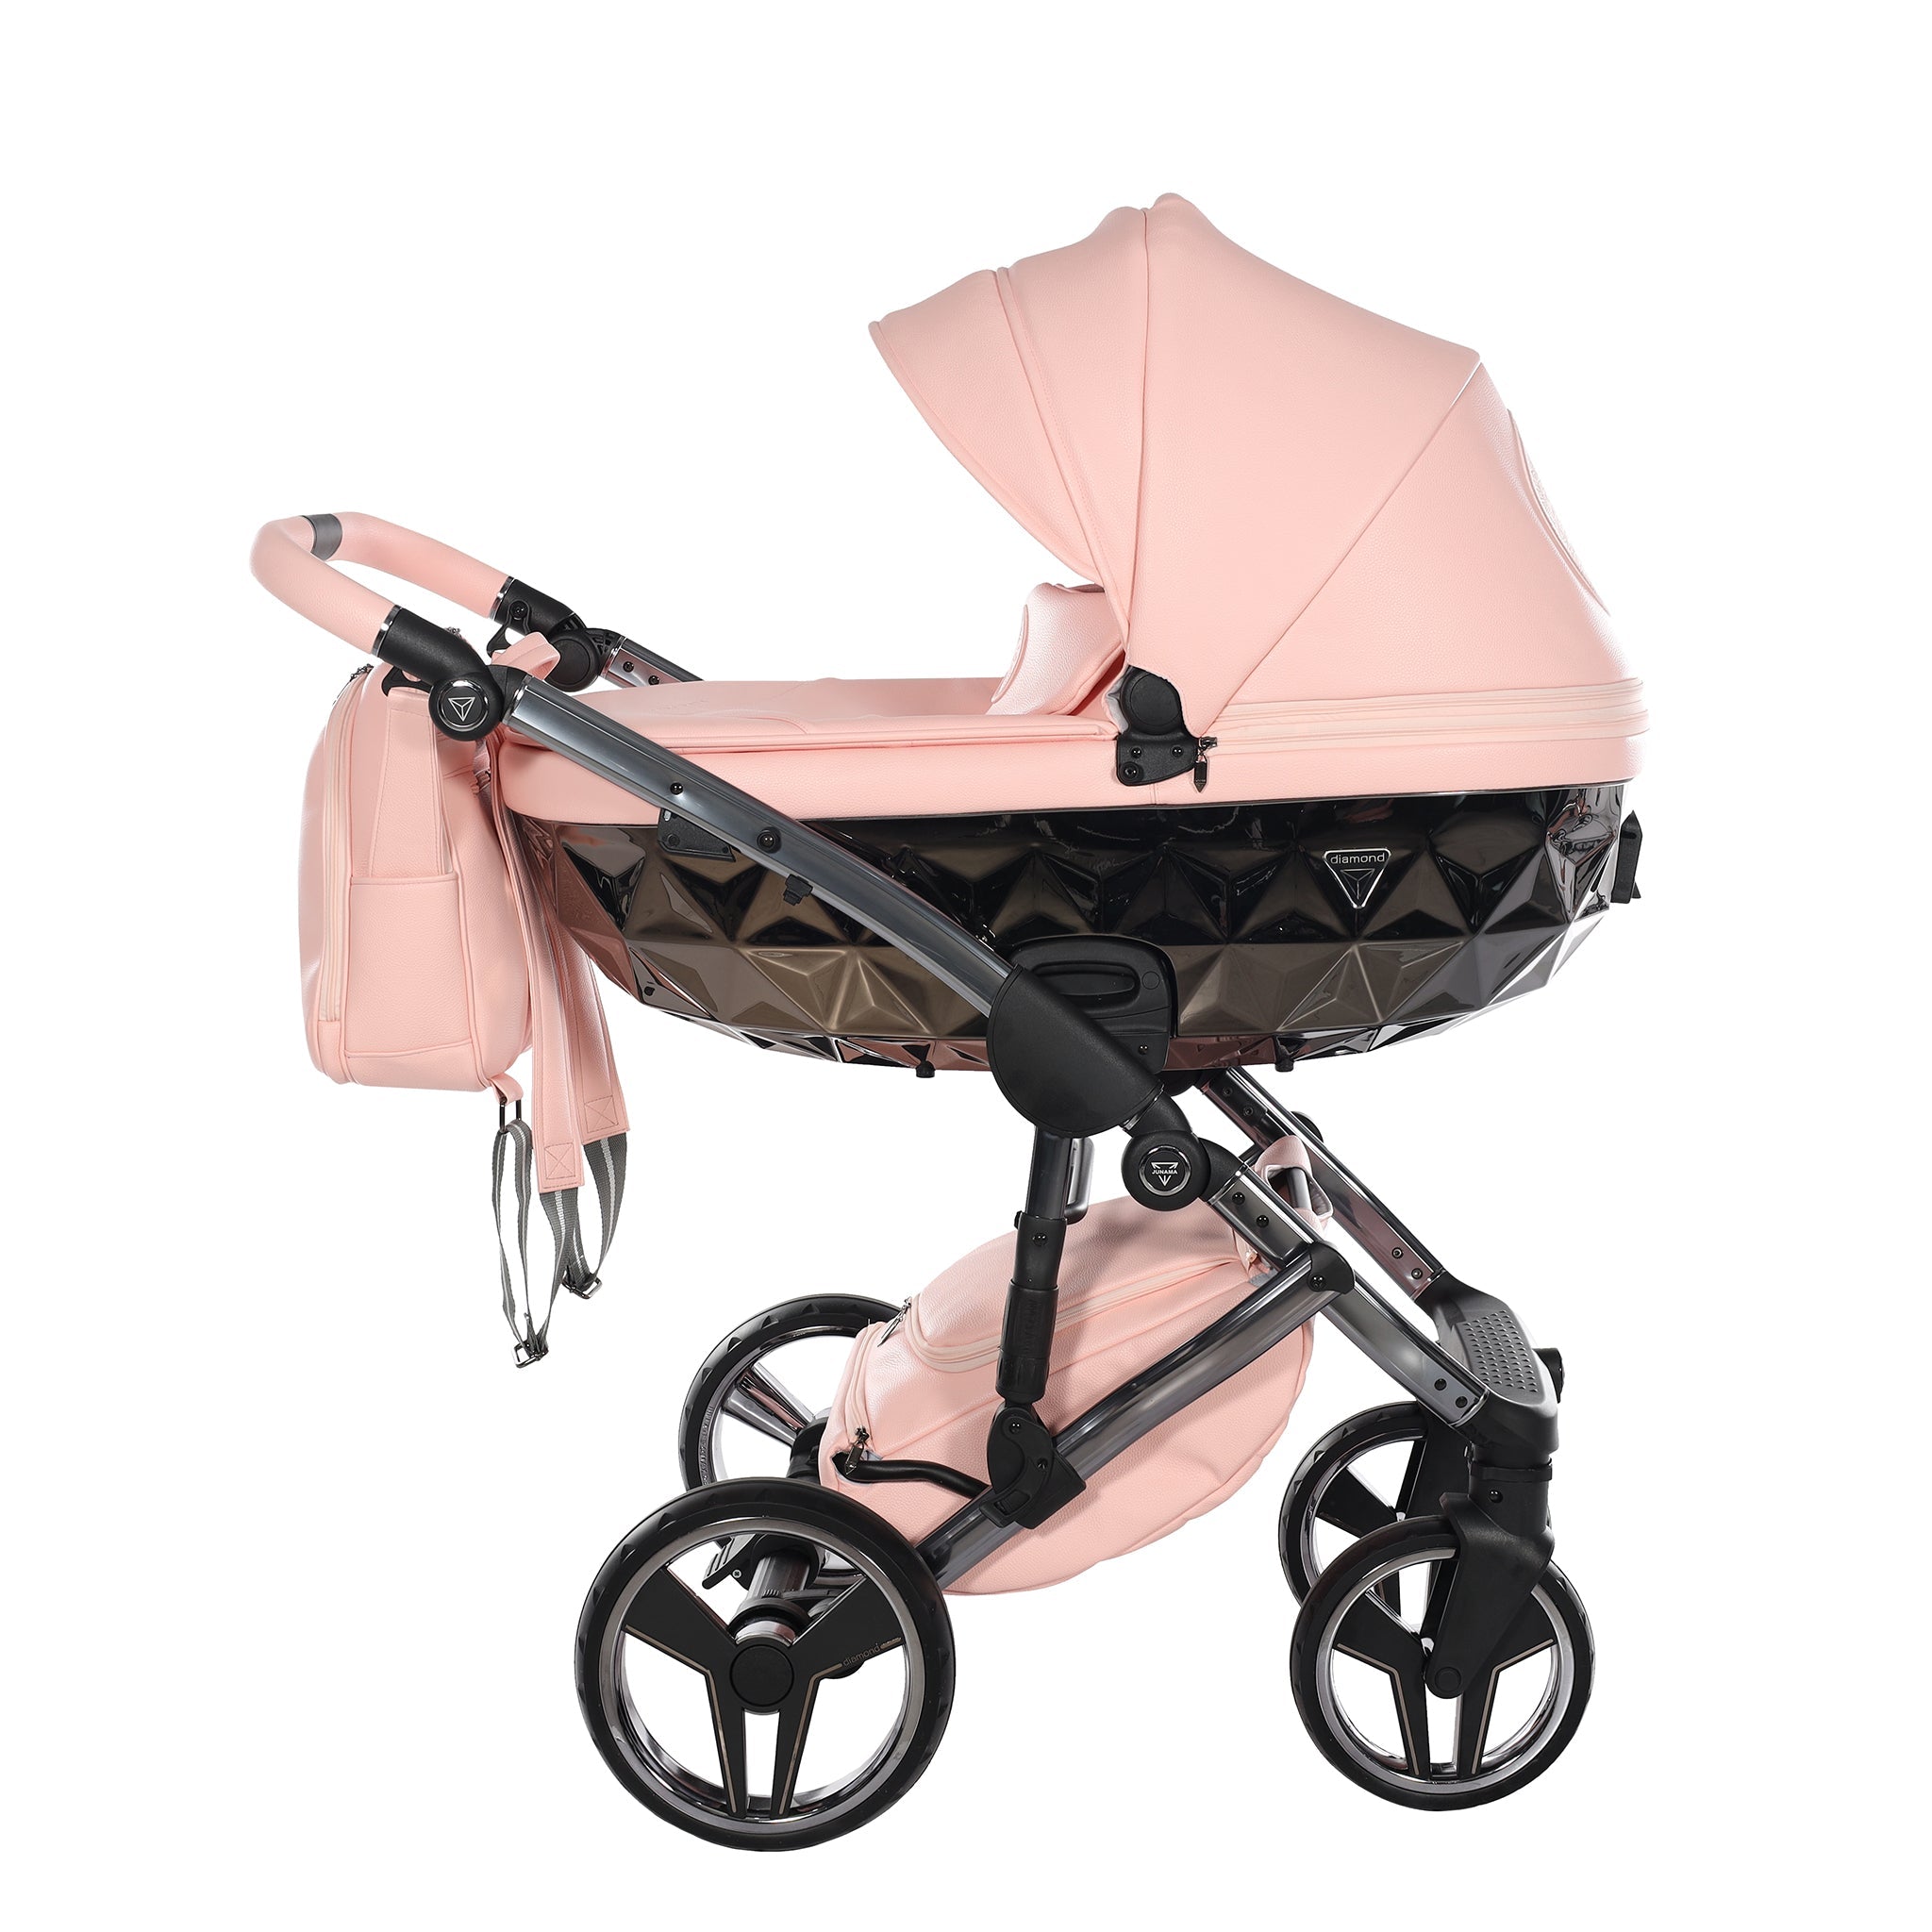 Junama Handcraft, baby prams or stroller 2 in 1 - Apricot color, Code number: JUNHC02